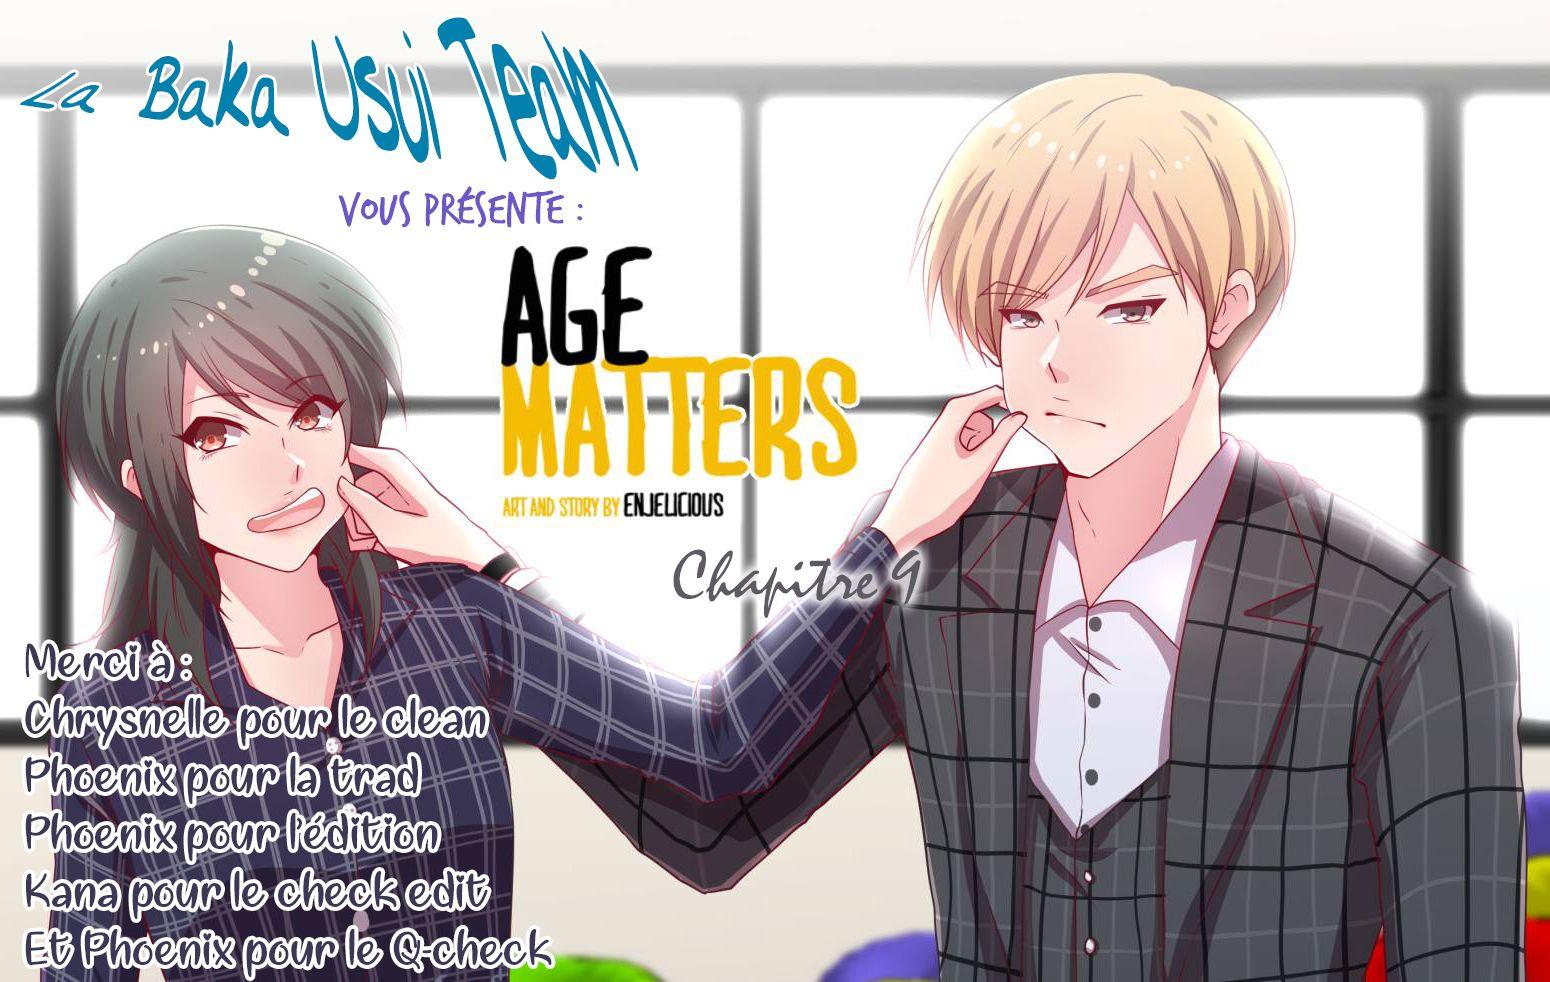 Age matters webtoon characters